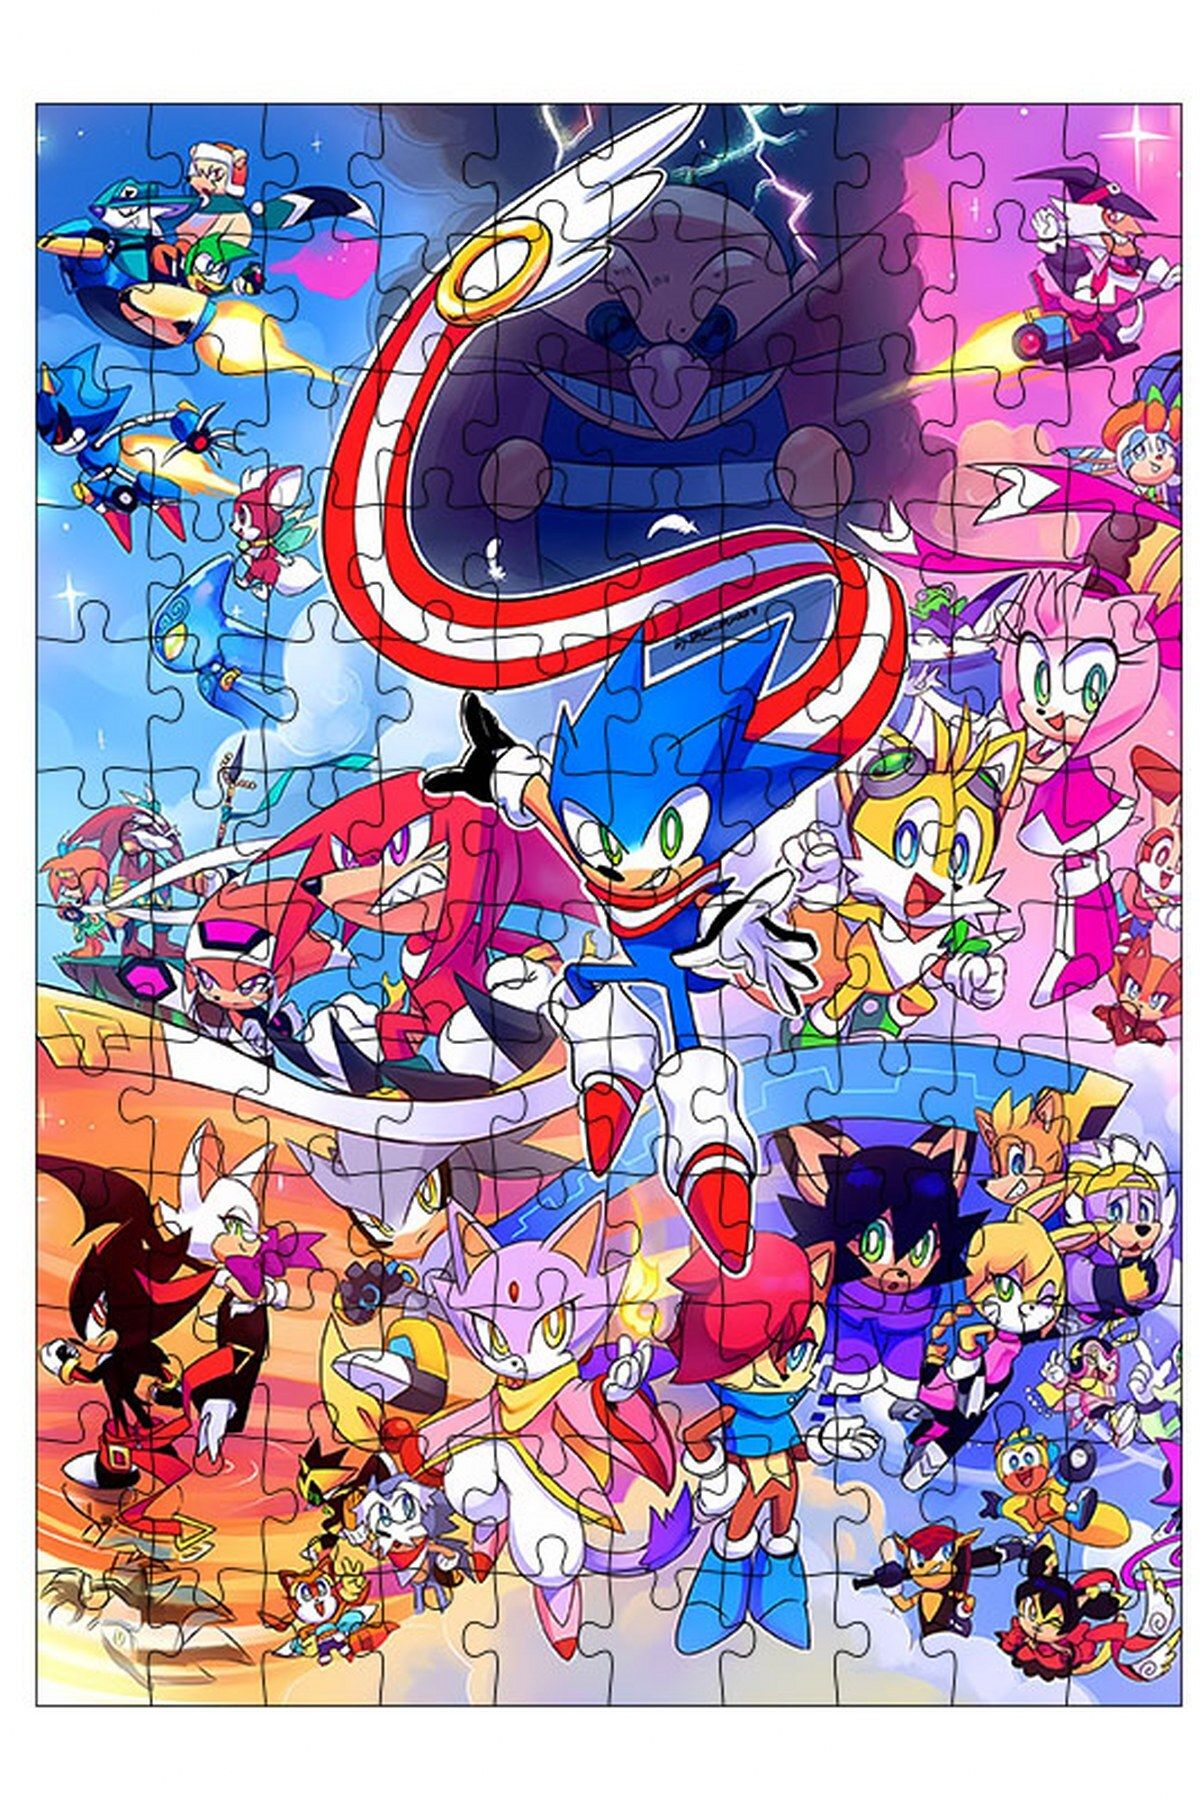 ekart Ahşap Mdf Puzzle Yapboz Süper Sonic 120 Parça 25*35 cm